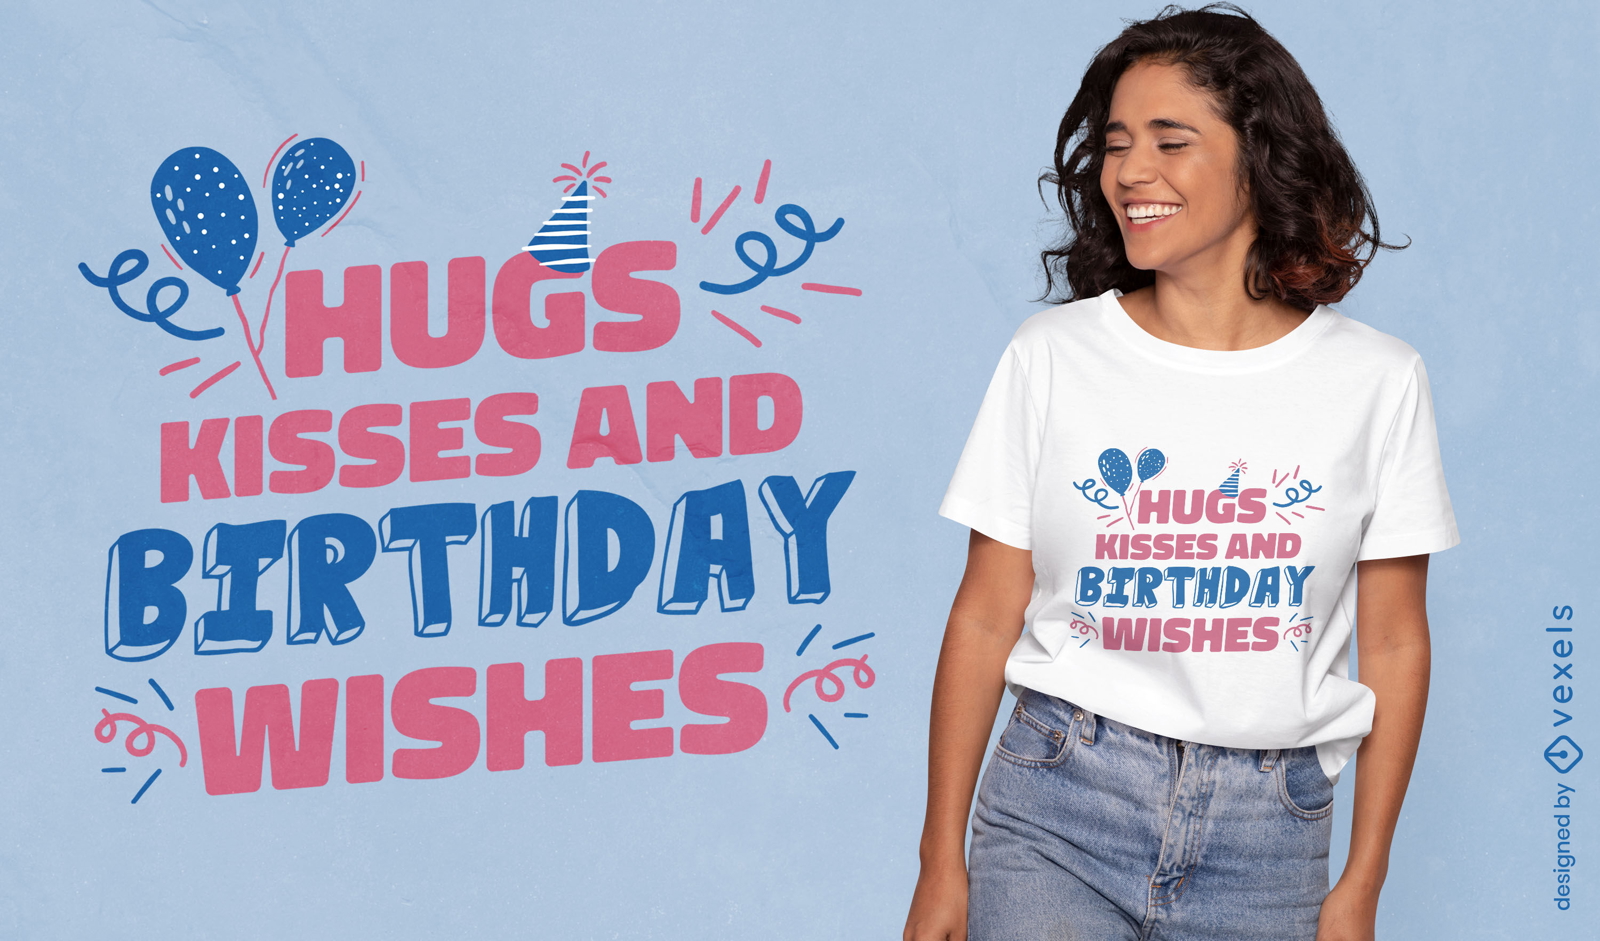 Birthday wishes quote t-shirt design